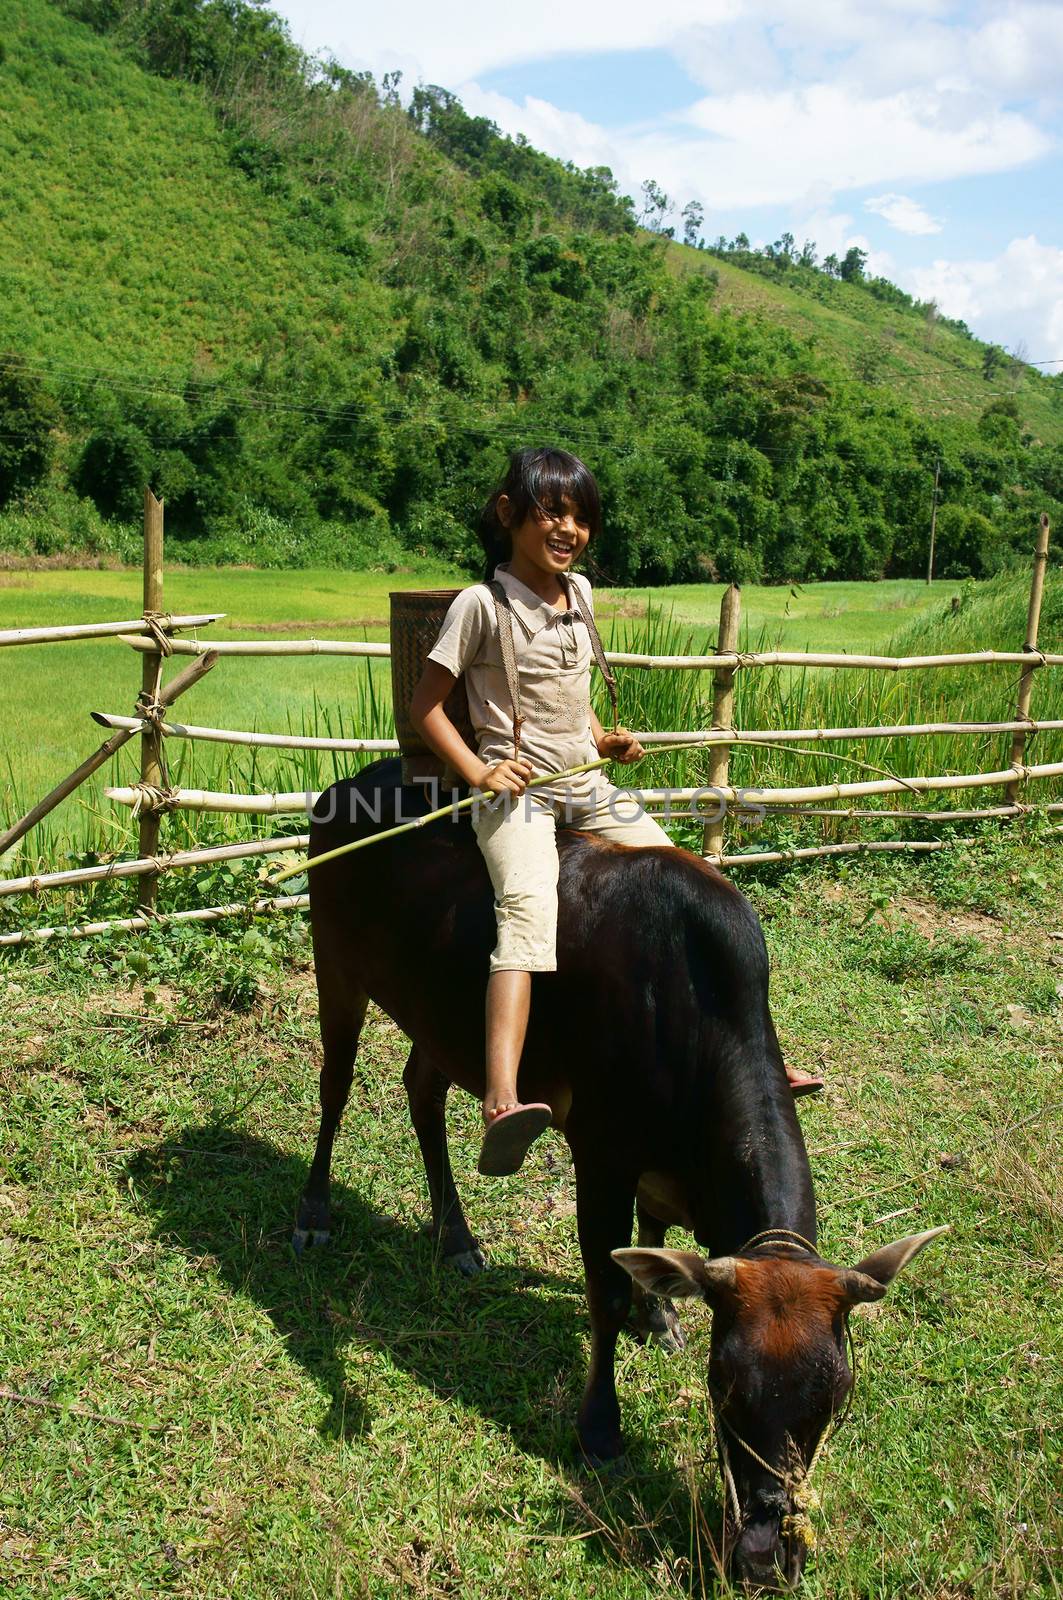 Daklak has many ethinic minority,  children rarely go to school so they help their family to herd oxen. Daklak, Viet Nam- September 03, 2013

